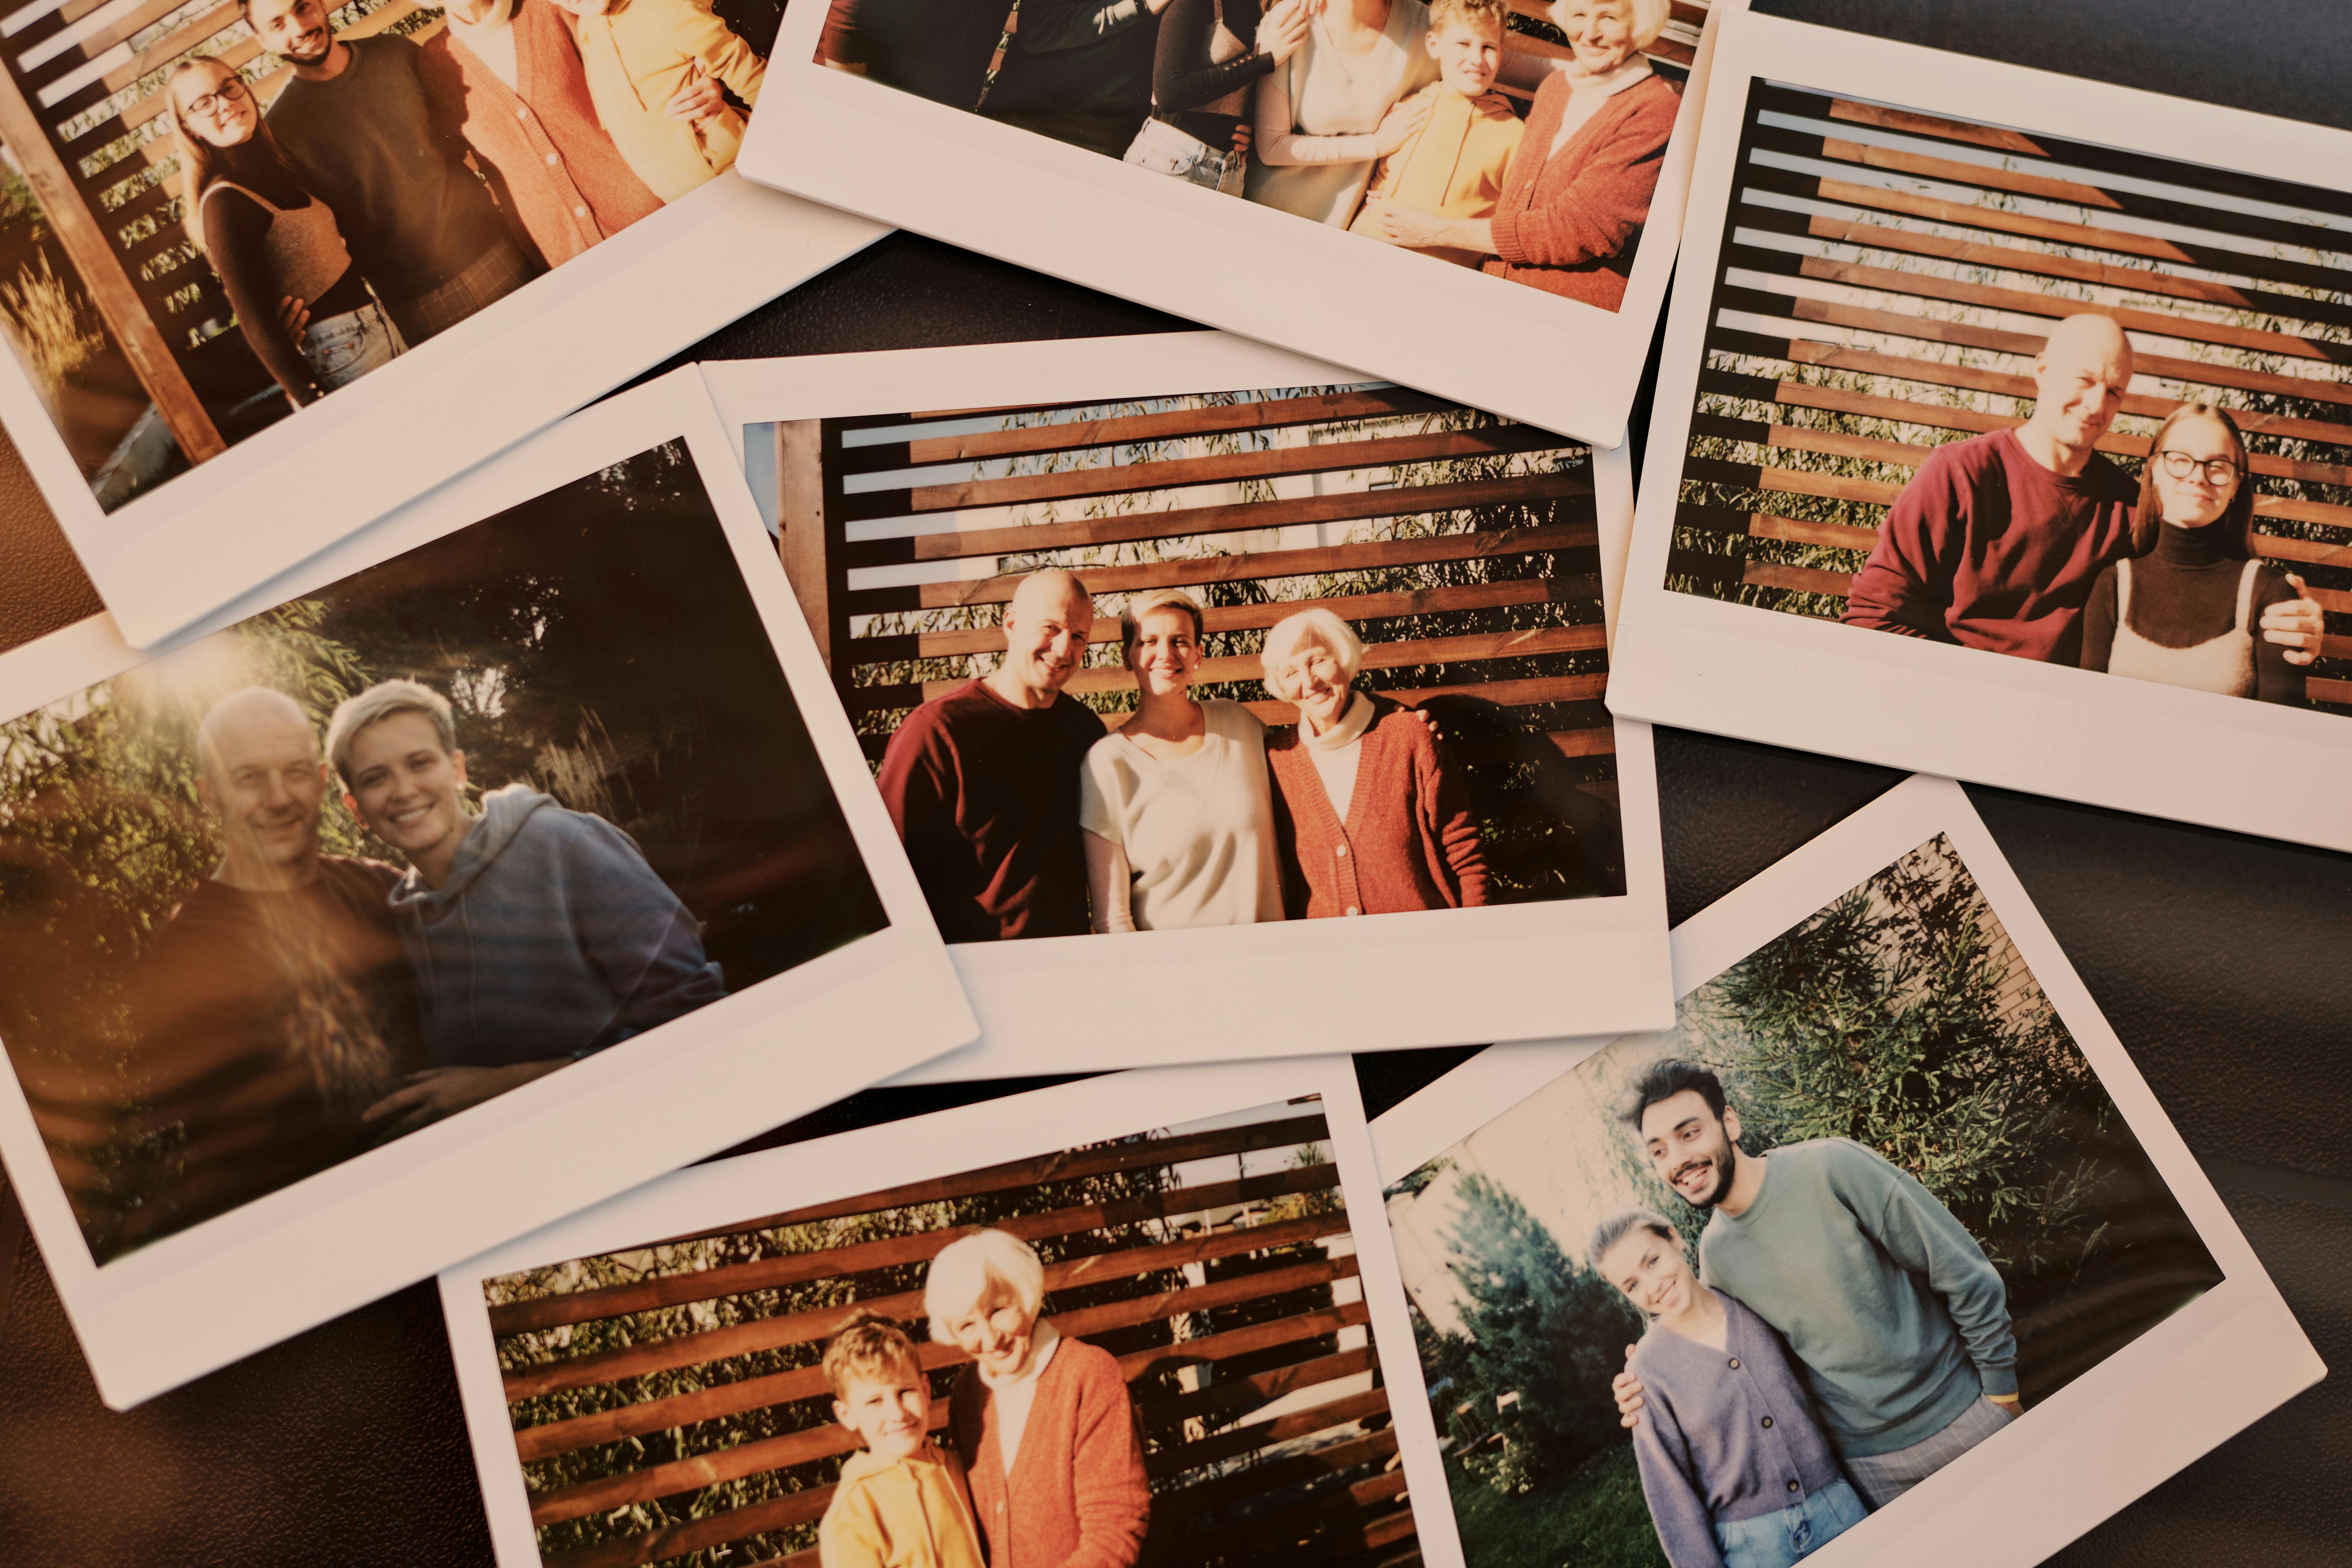 Mehrere Polaroidbilder | Quelle: Pexels